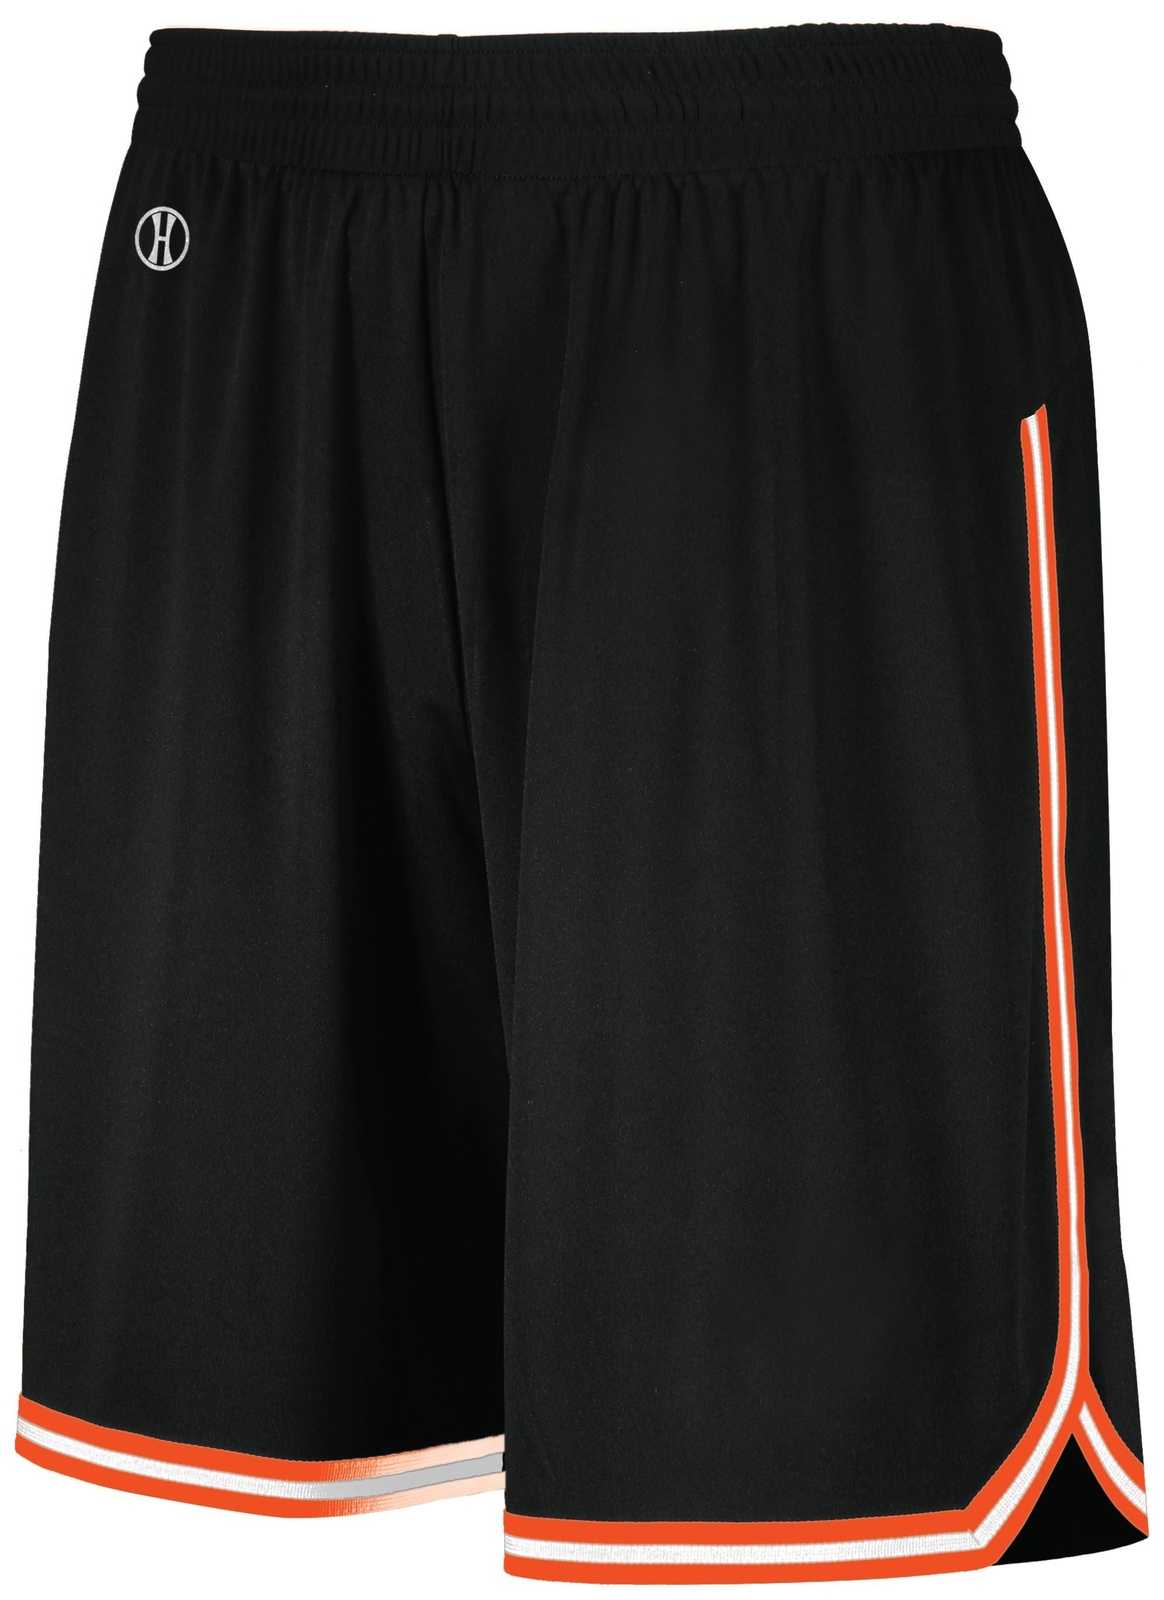 Holloway 224277 Youth Retro Basketball Shorts - Black Orange White - HIT a Double